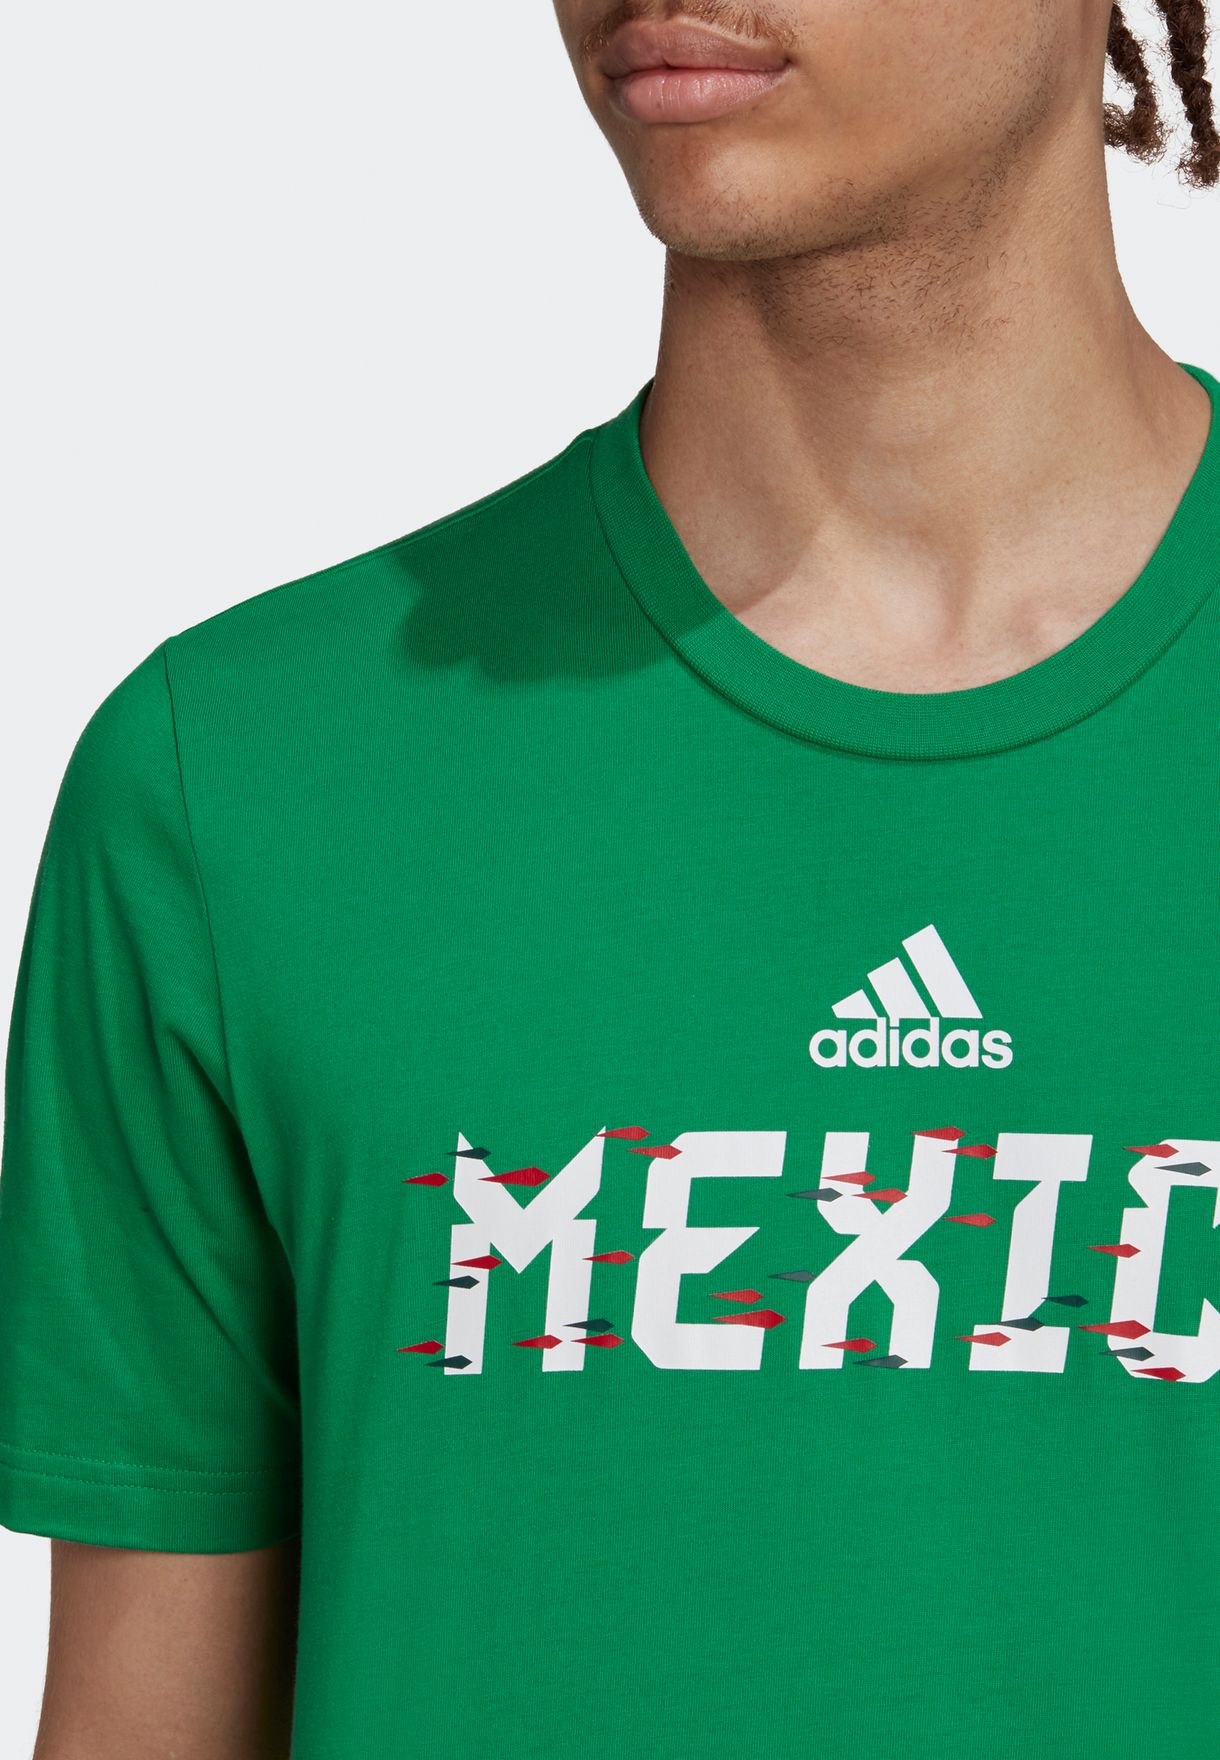 Mexico Teagrn T-Shirt